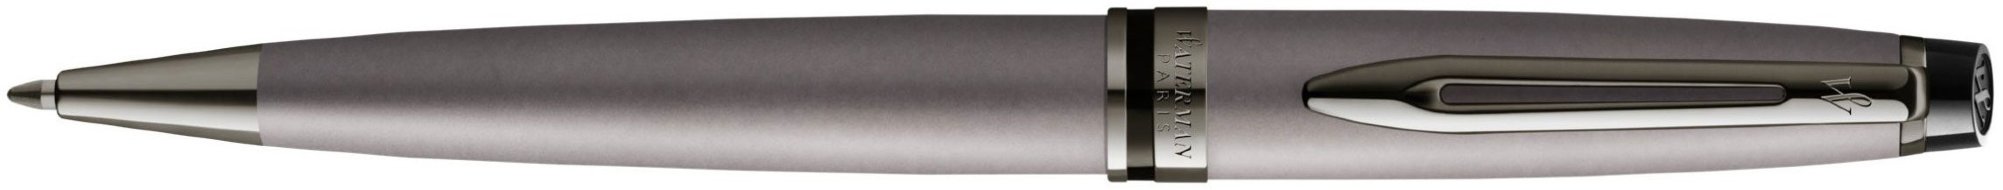 Ручка шариковая Waterman Expert DeLuxe Metallic Silver RT M синие чернила